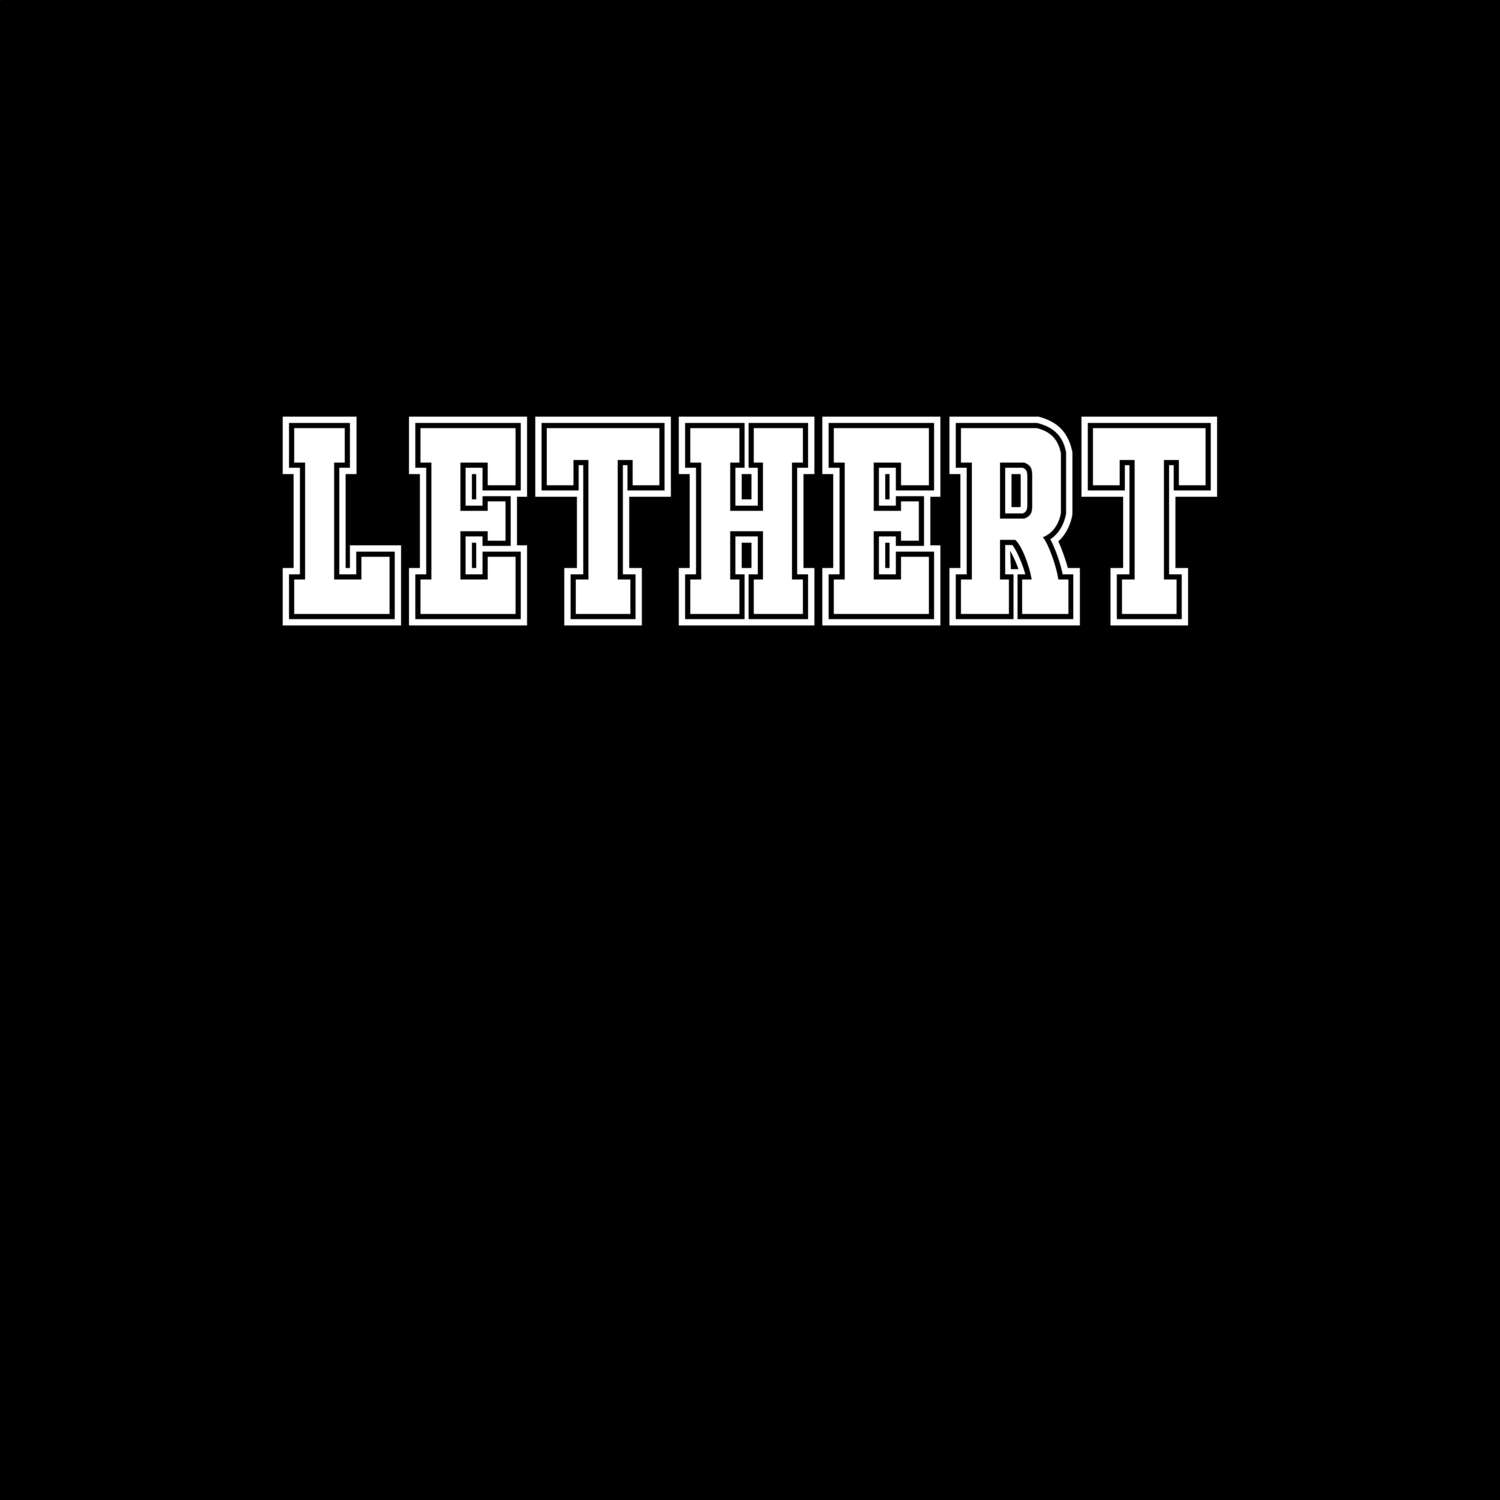 Lethert T-Shirt »Classic«